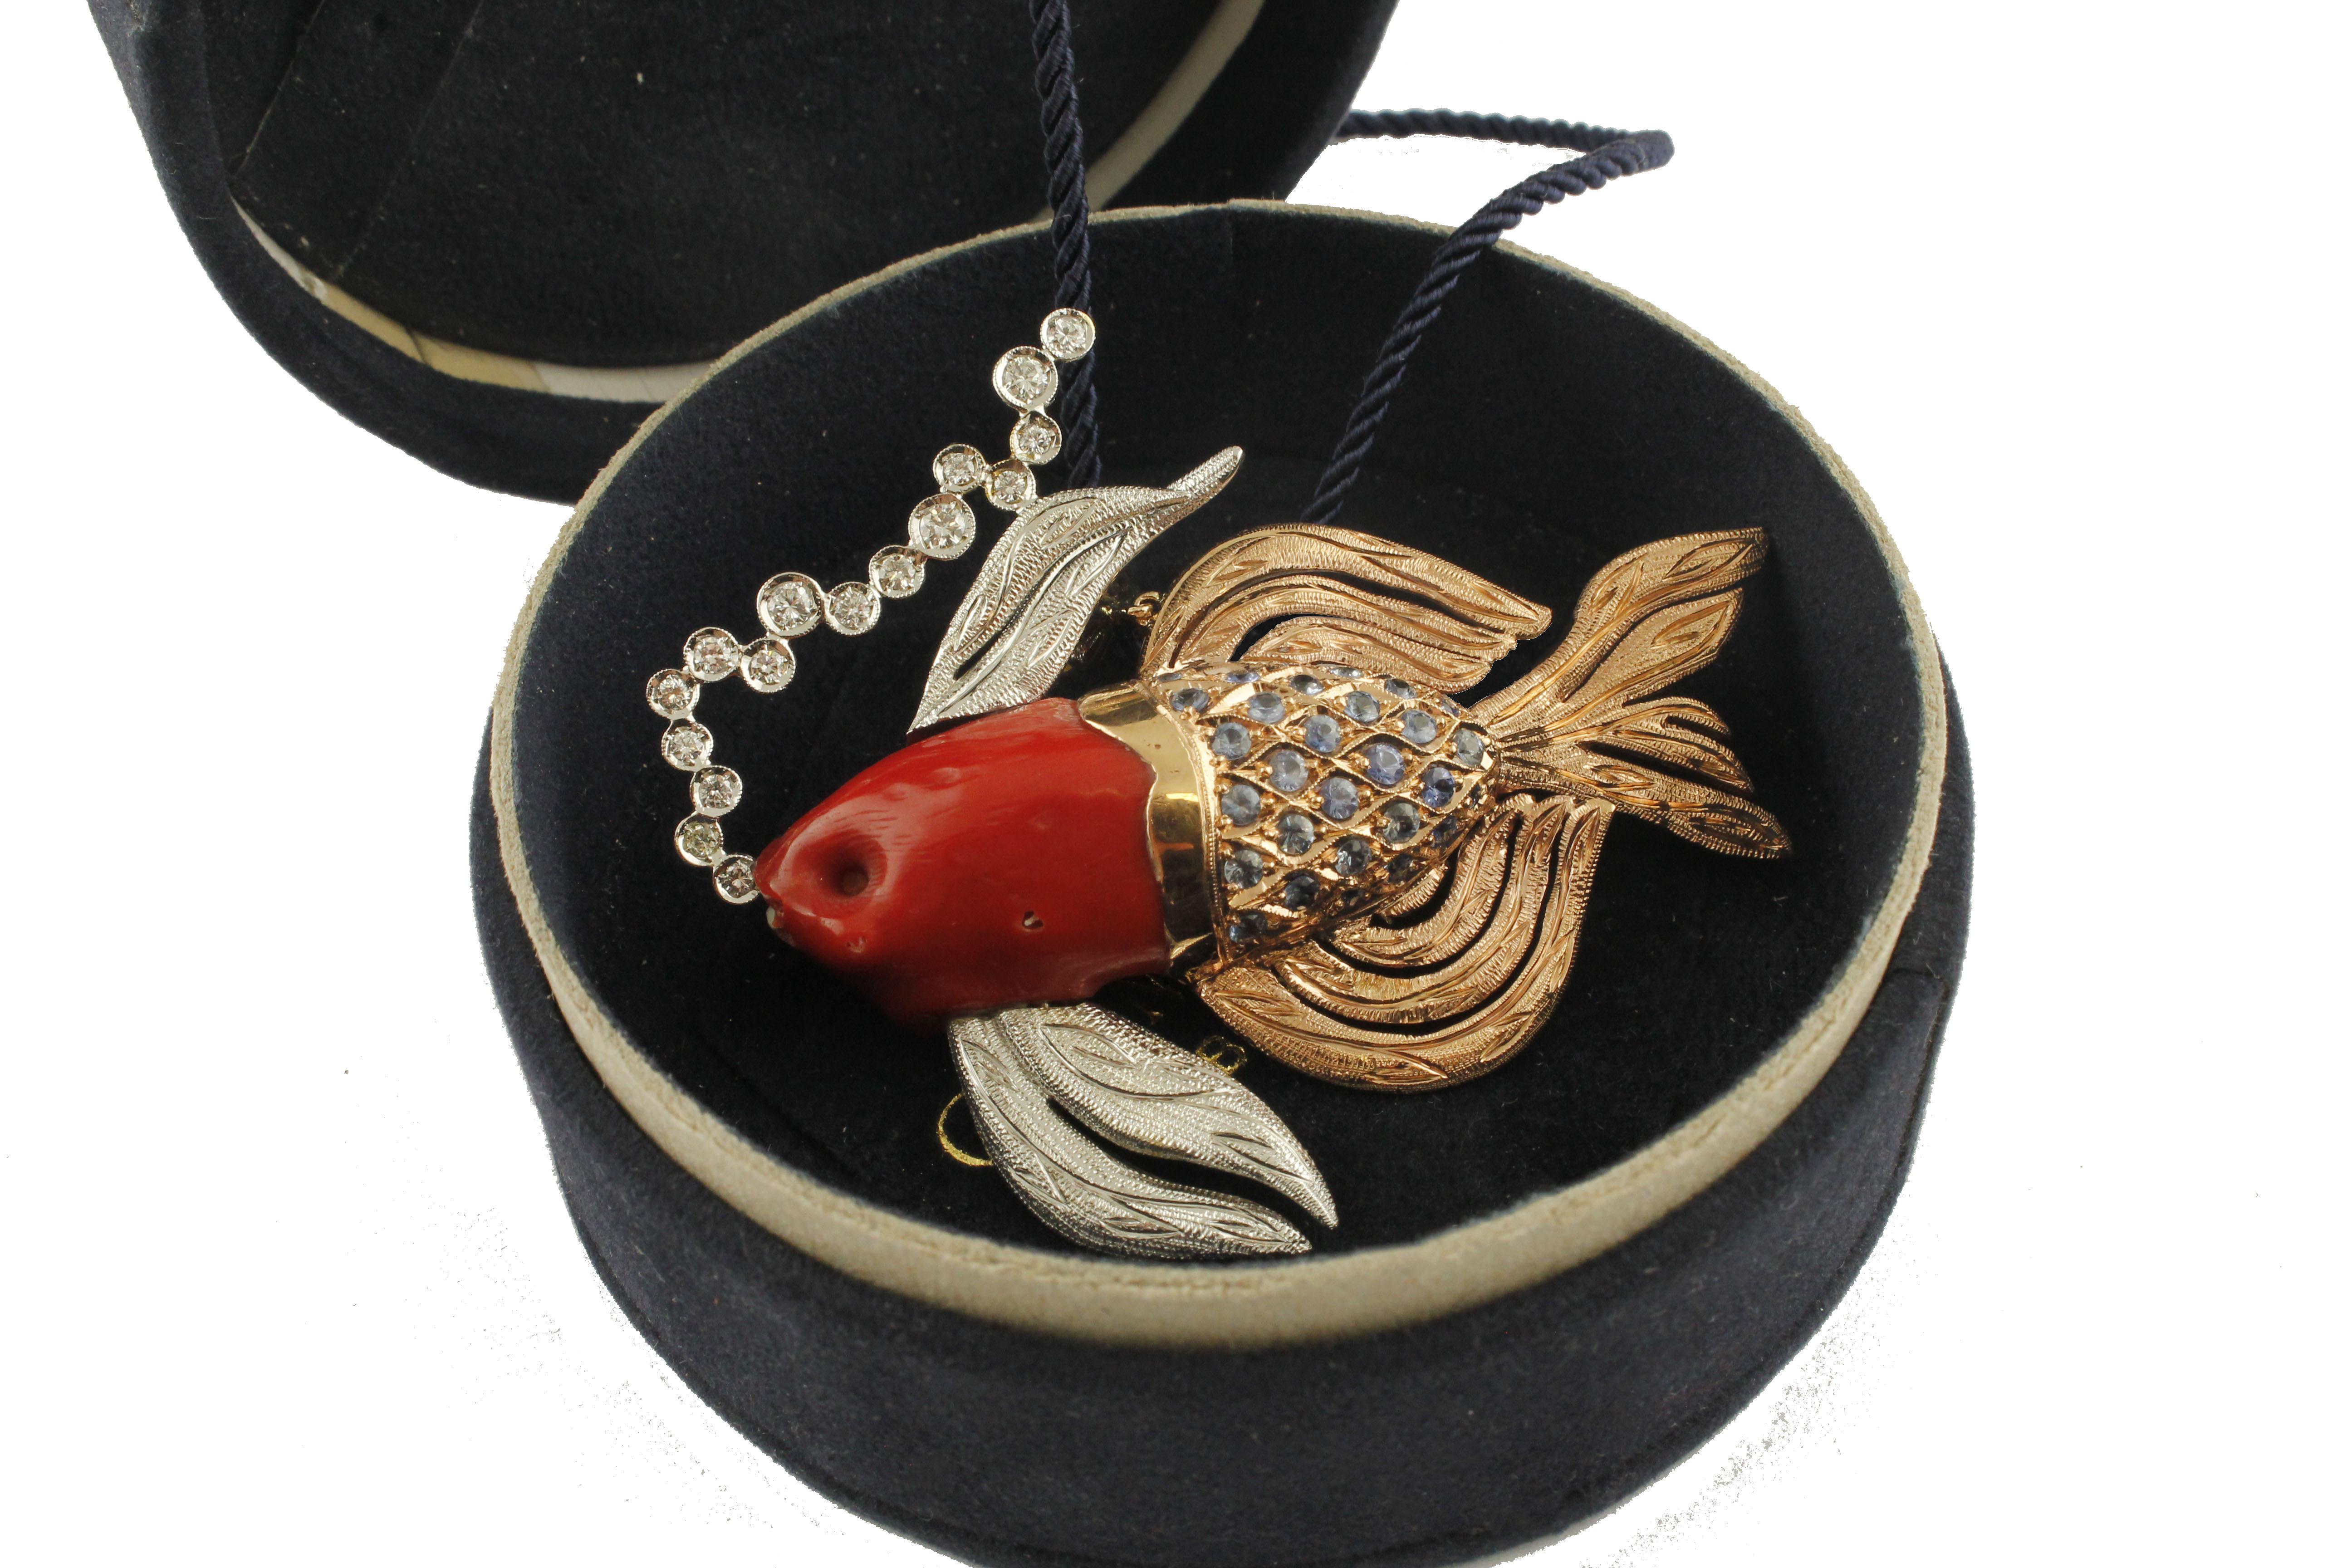 Brilliant Cut Diamonds, Blue Sapphires, Red Coral, 14K Rose Gold, Fish Shape Pendant Necklace For Sale